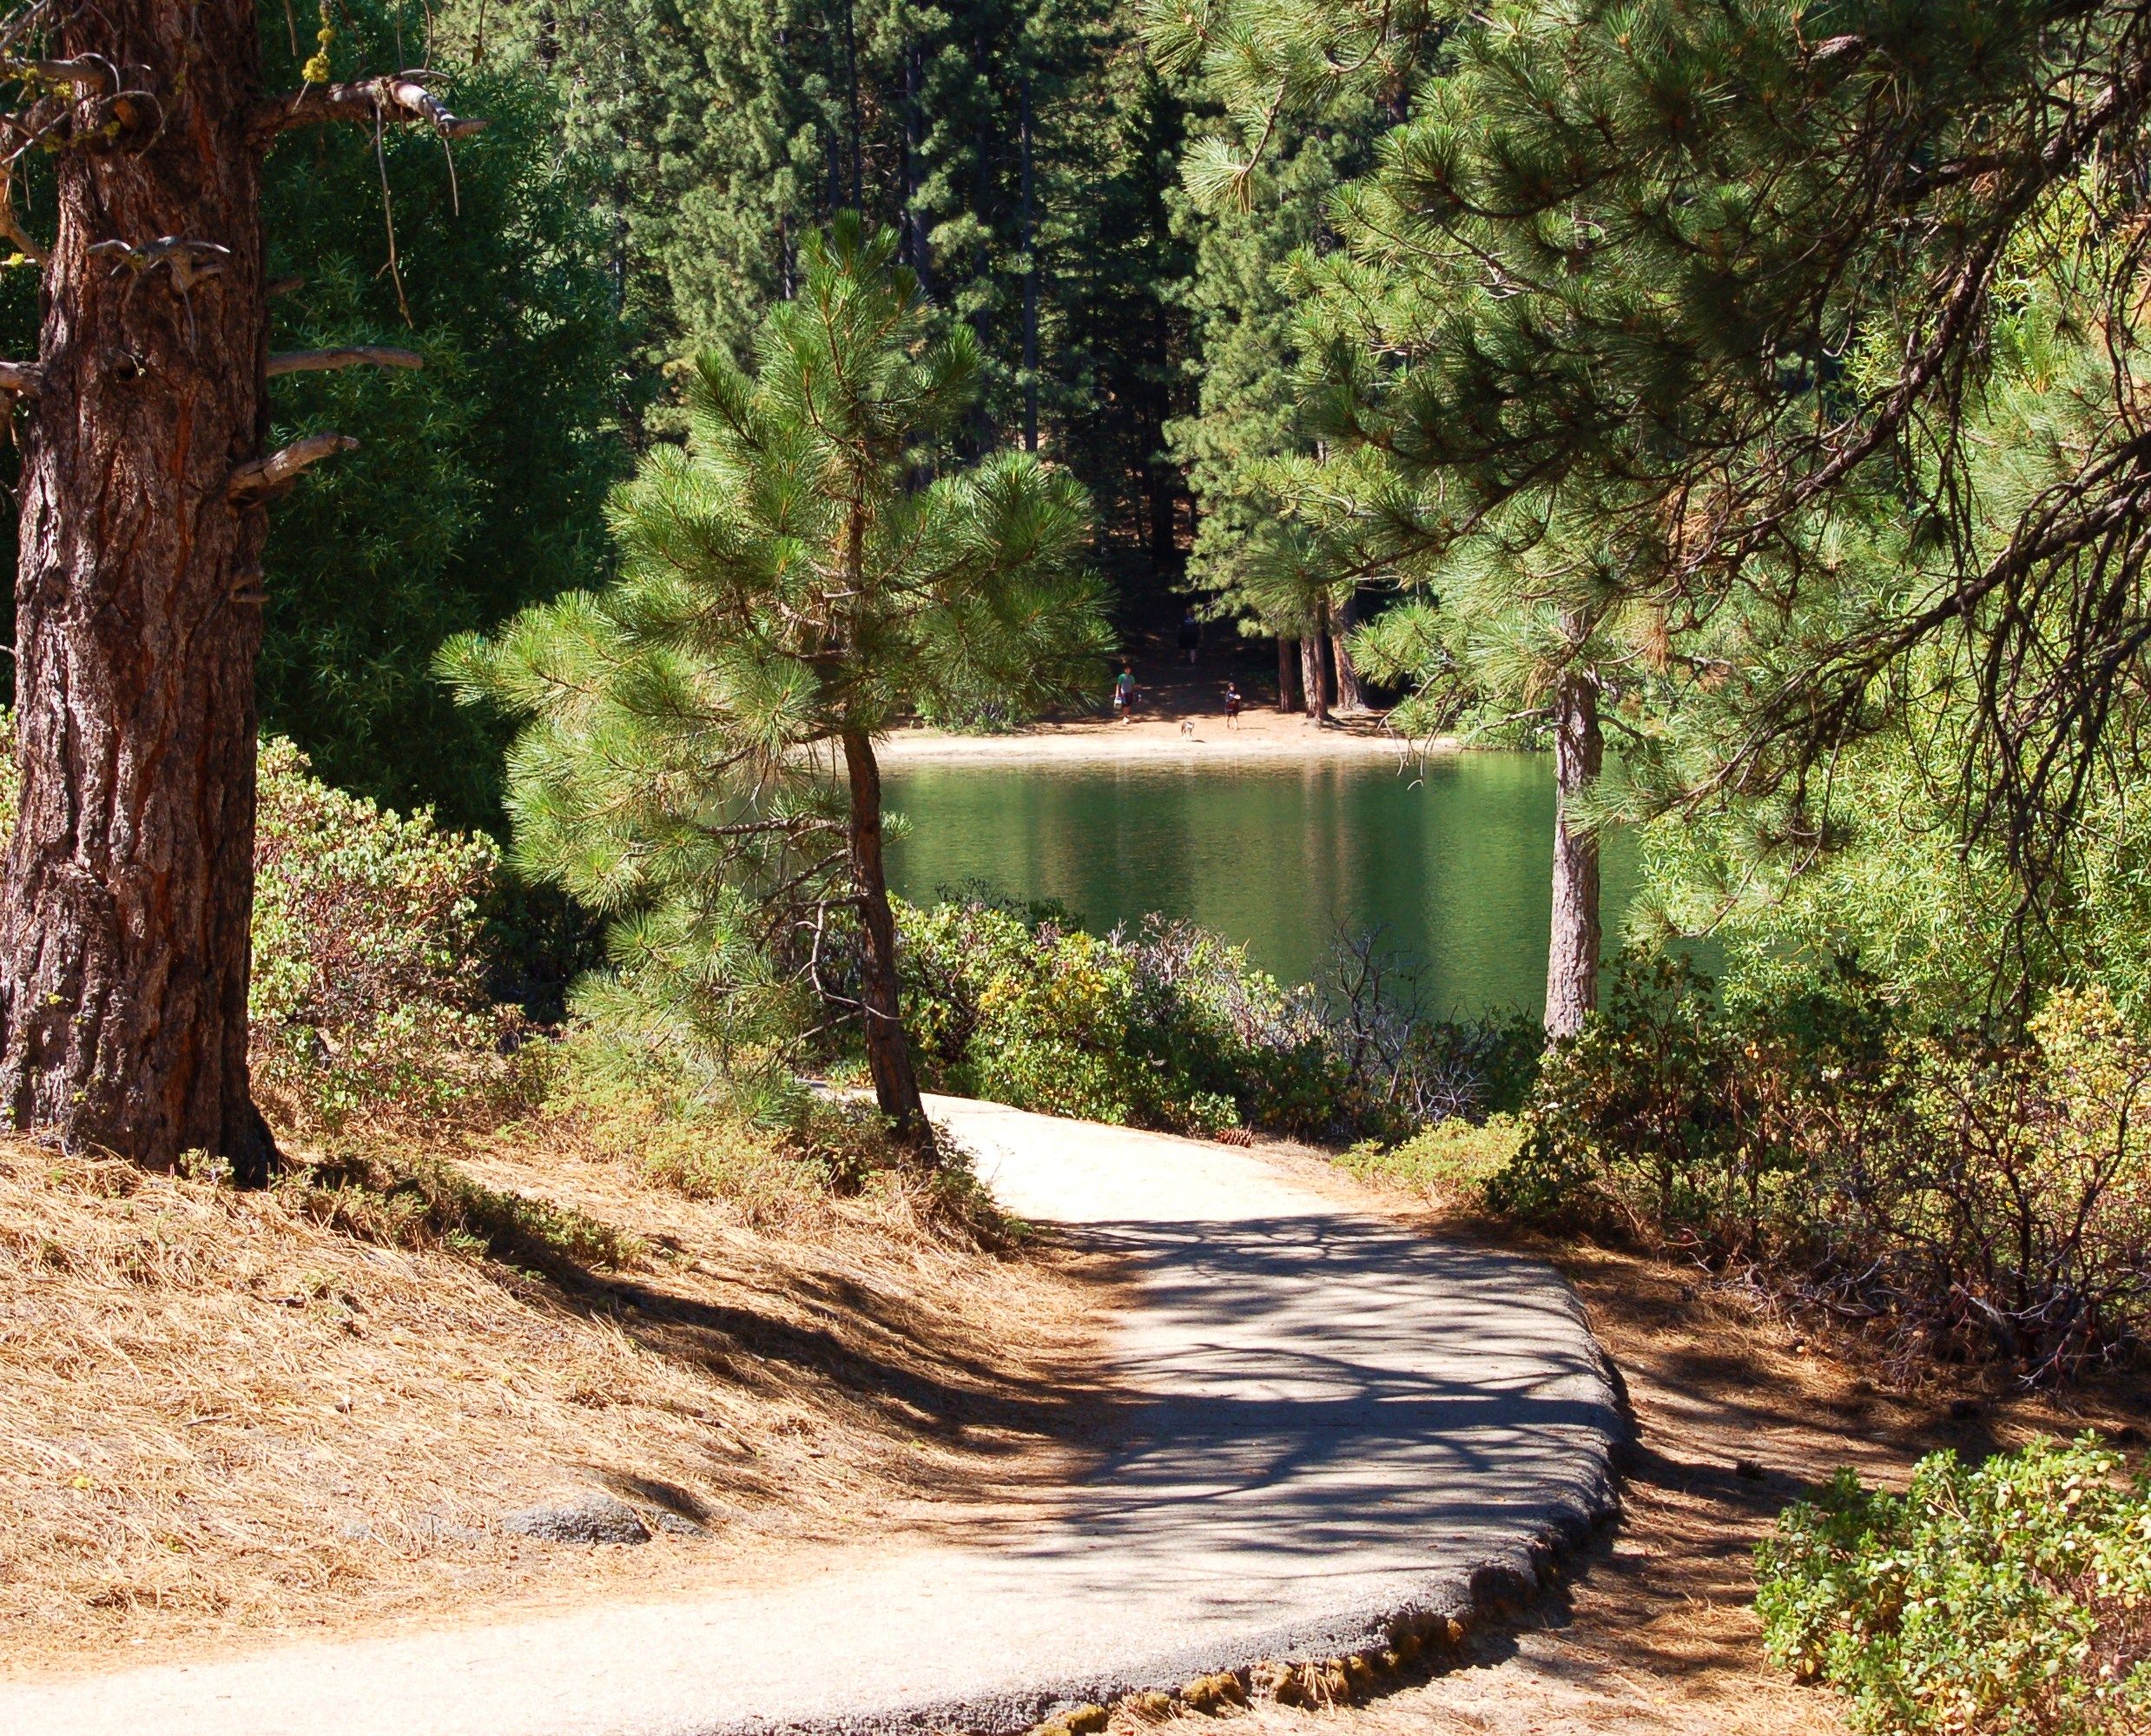 2 mile trail around Hume Lake | Pathways | Pinterest | Lakes ...